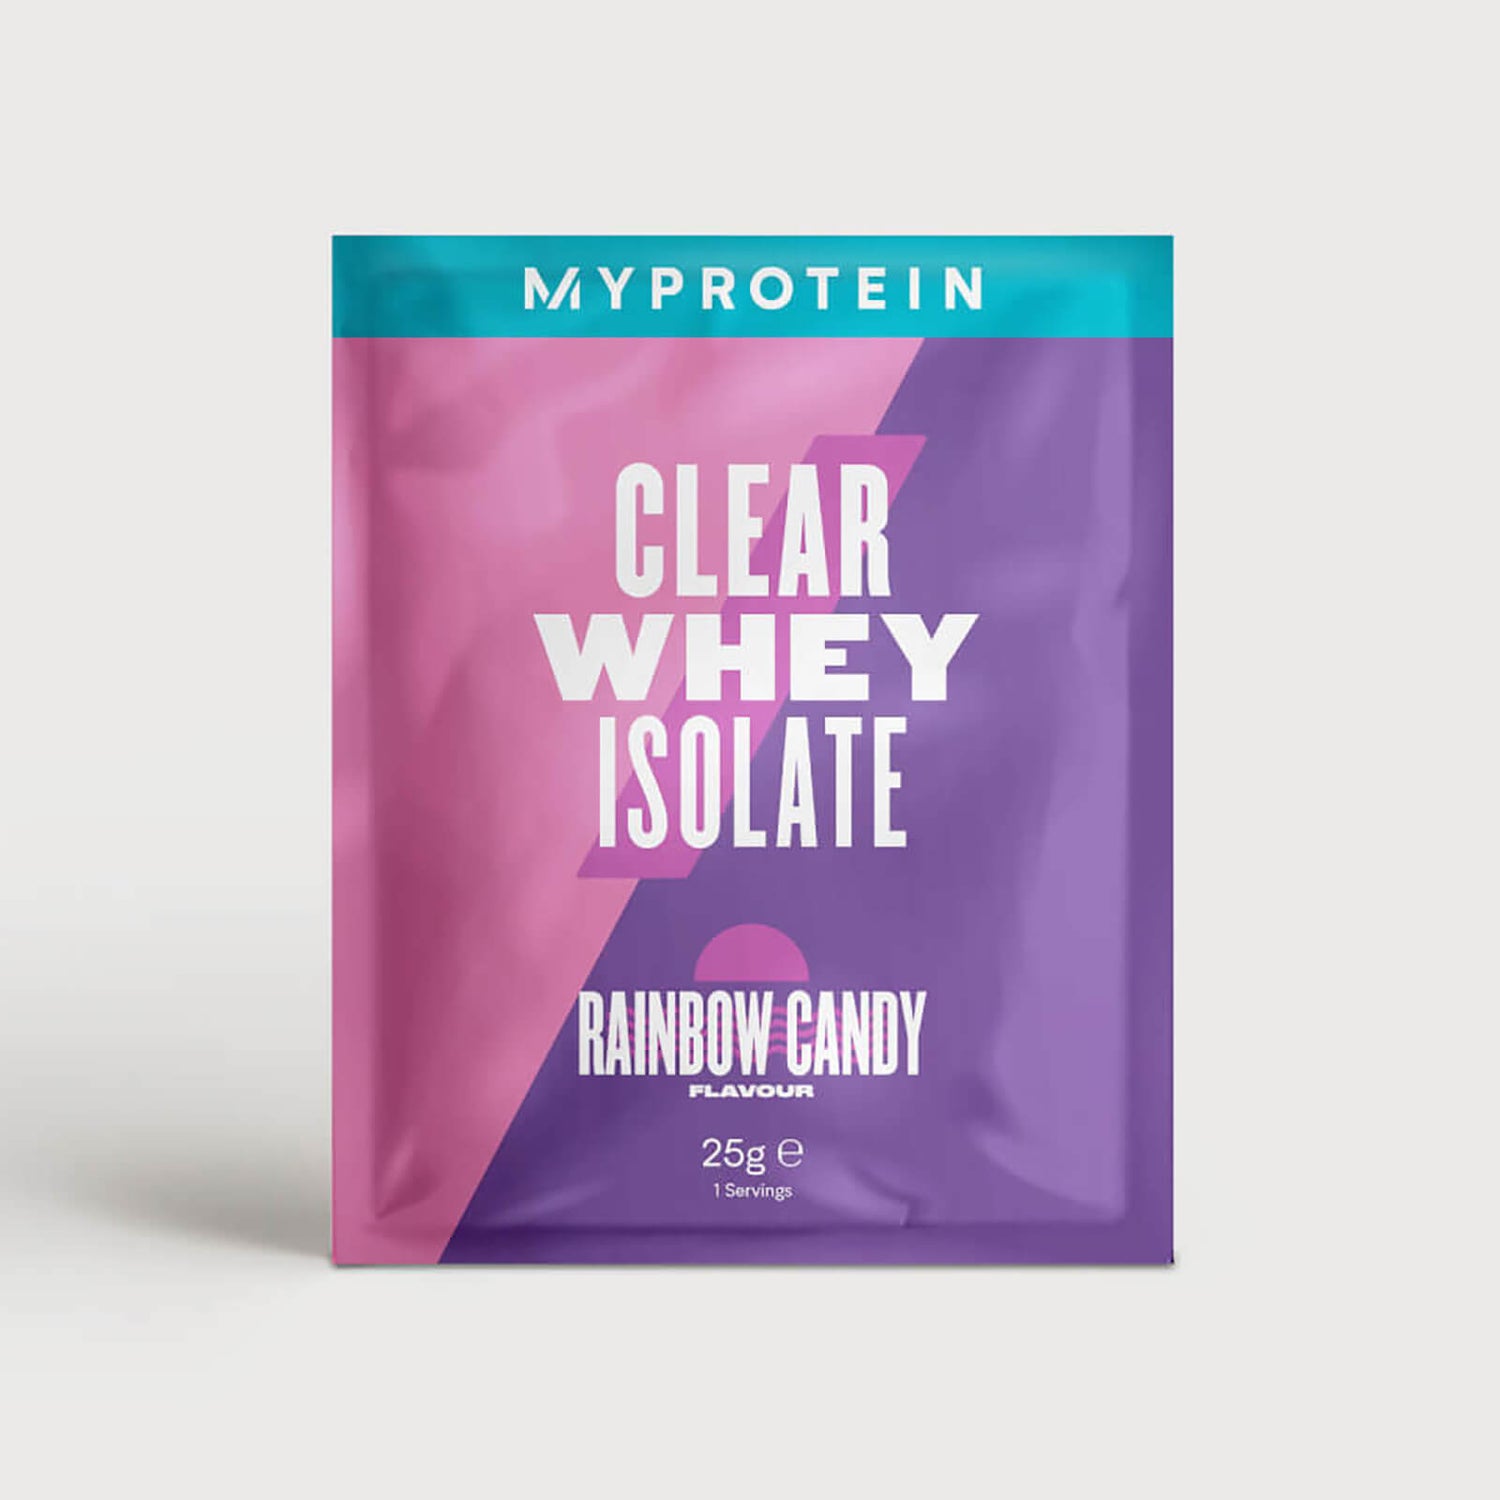 Myprotein Clear Whey Isolate (Sample) - 25g - Rainbow Candy